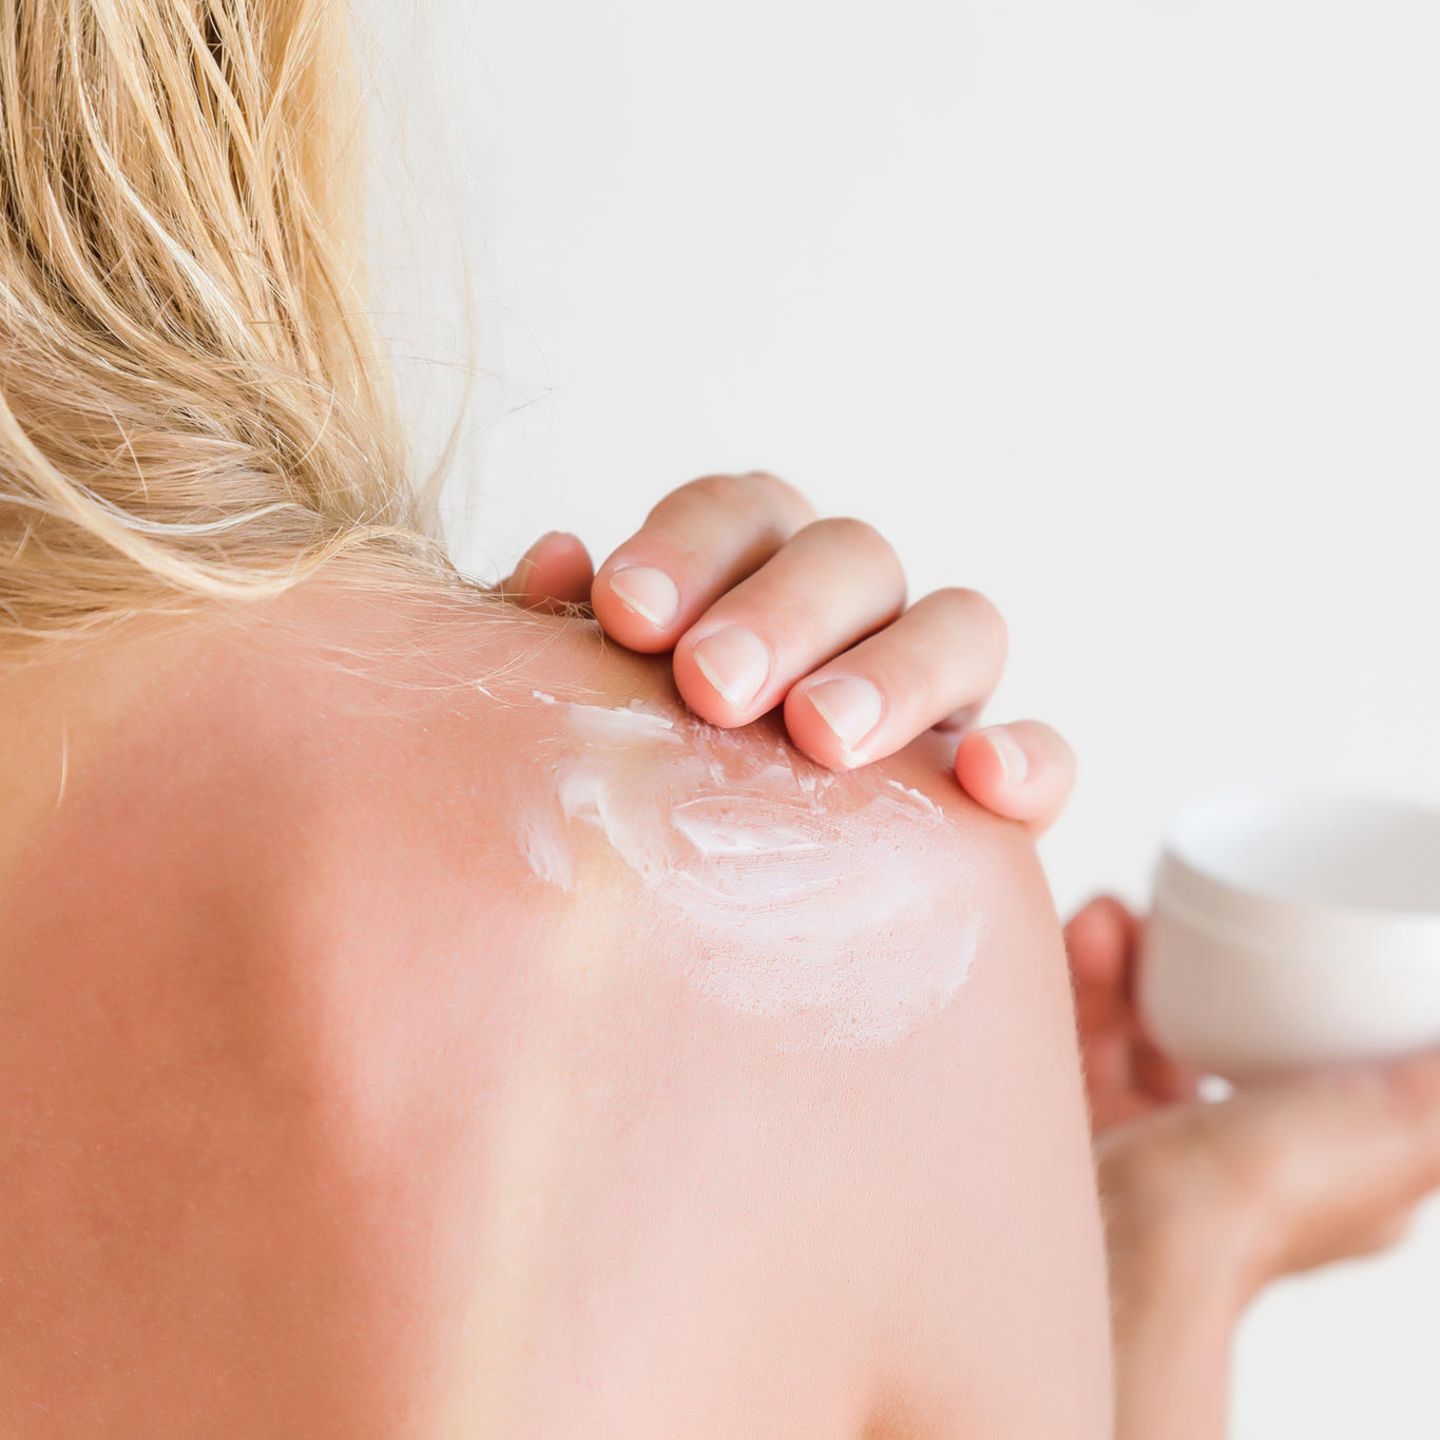 Hautprobleme: Frau mit Sonnenbrand